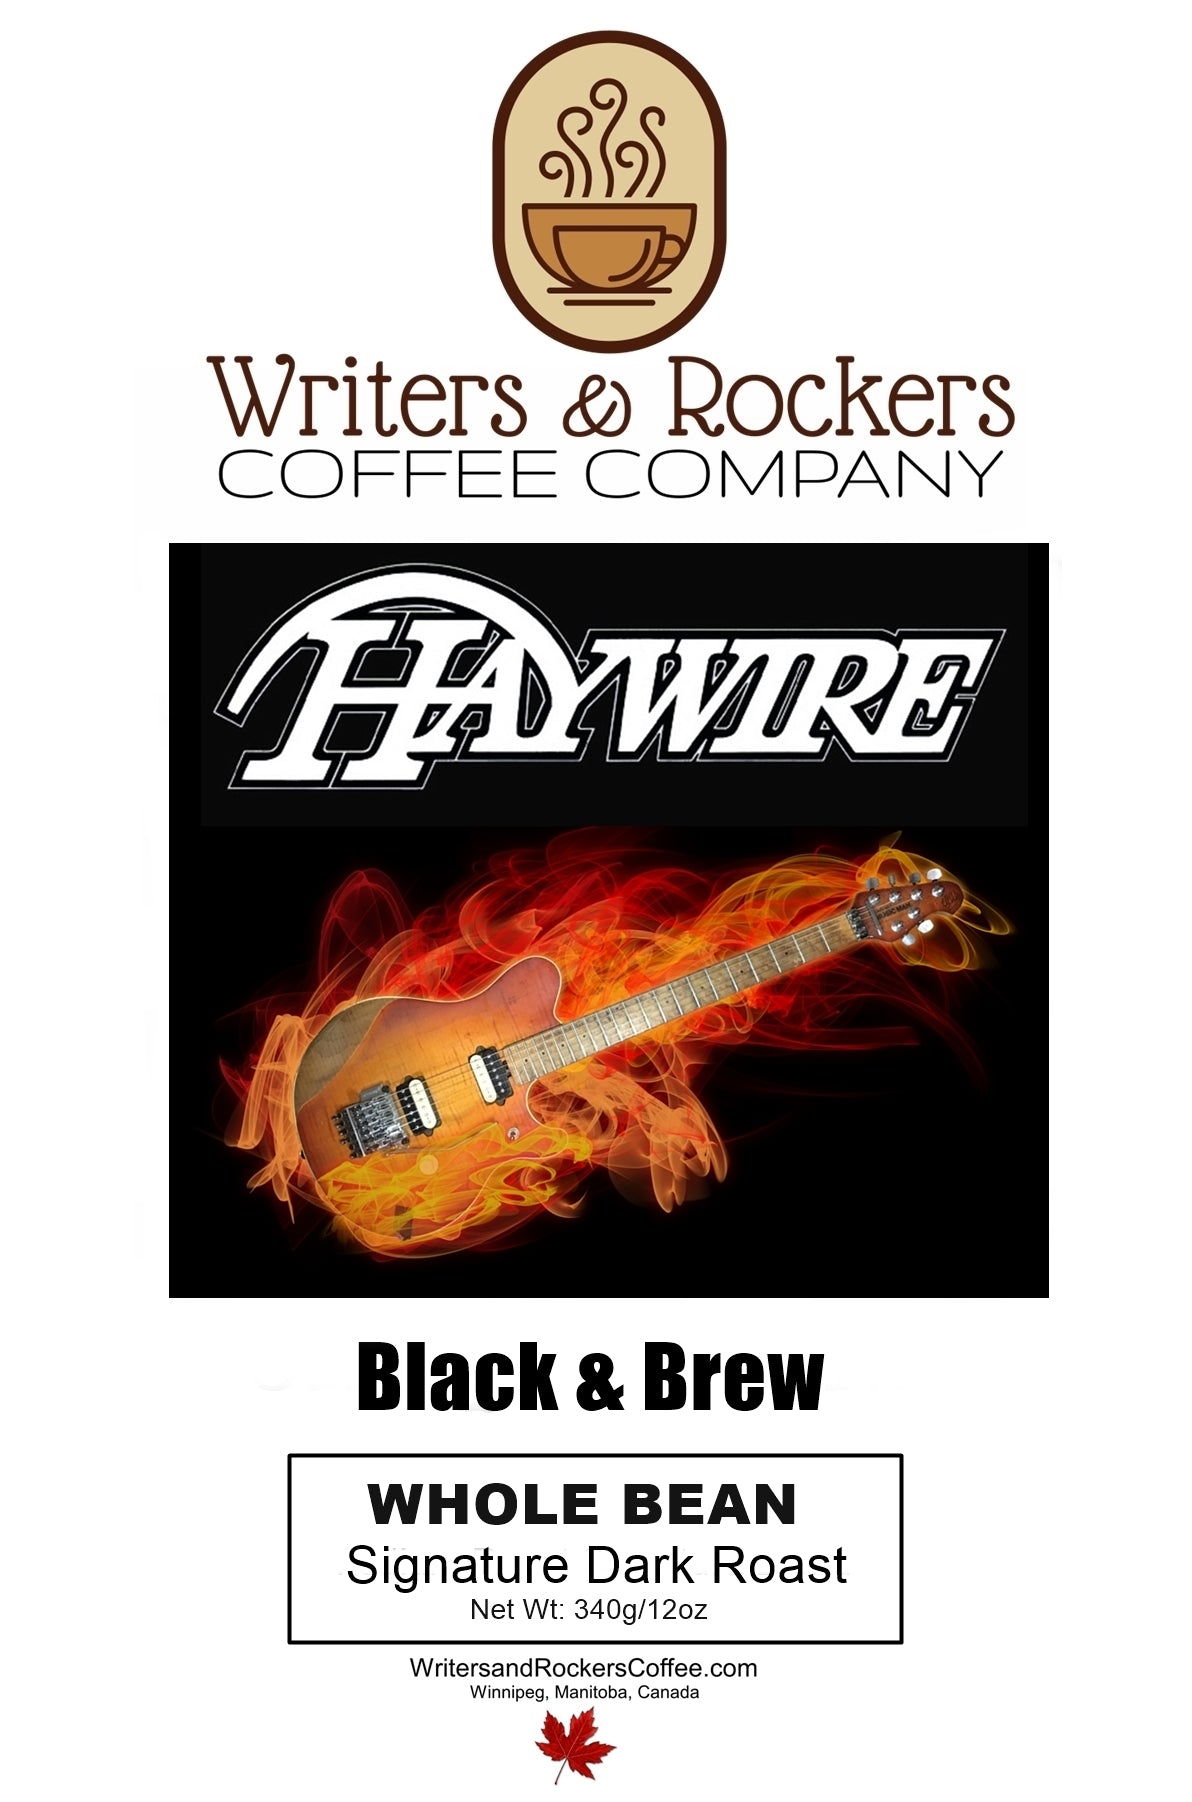 Haywire's Black & Brew